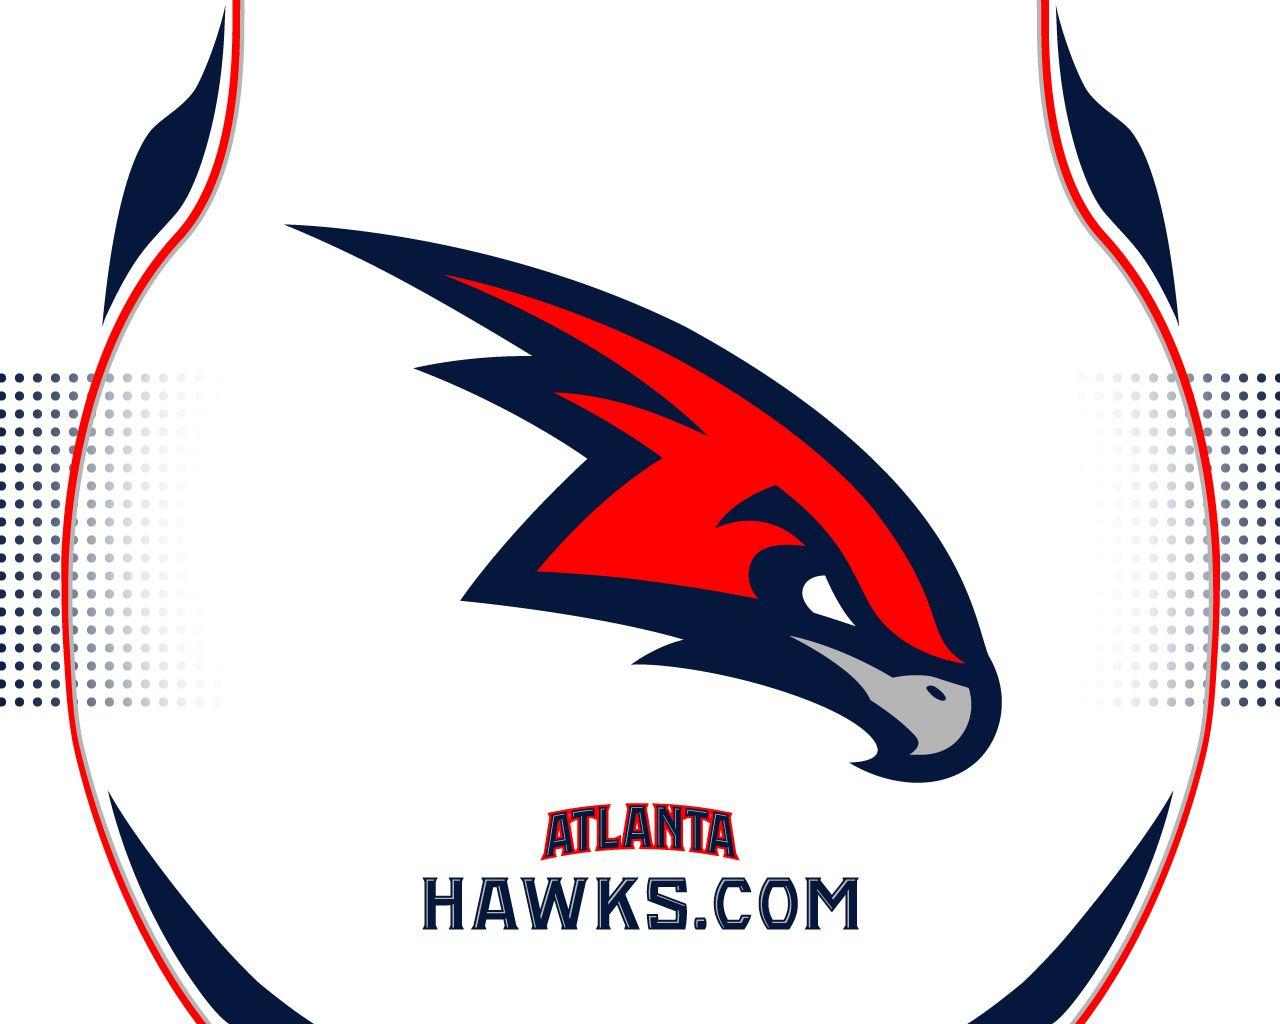 Atlanta Hawks Wallpaper, Chrome Themes & More for the Biggest